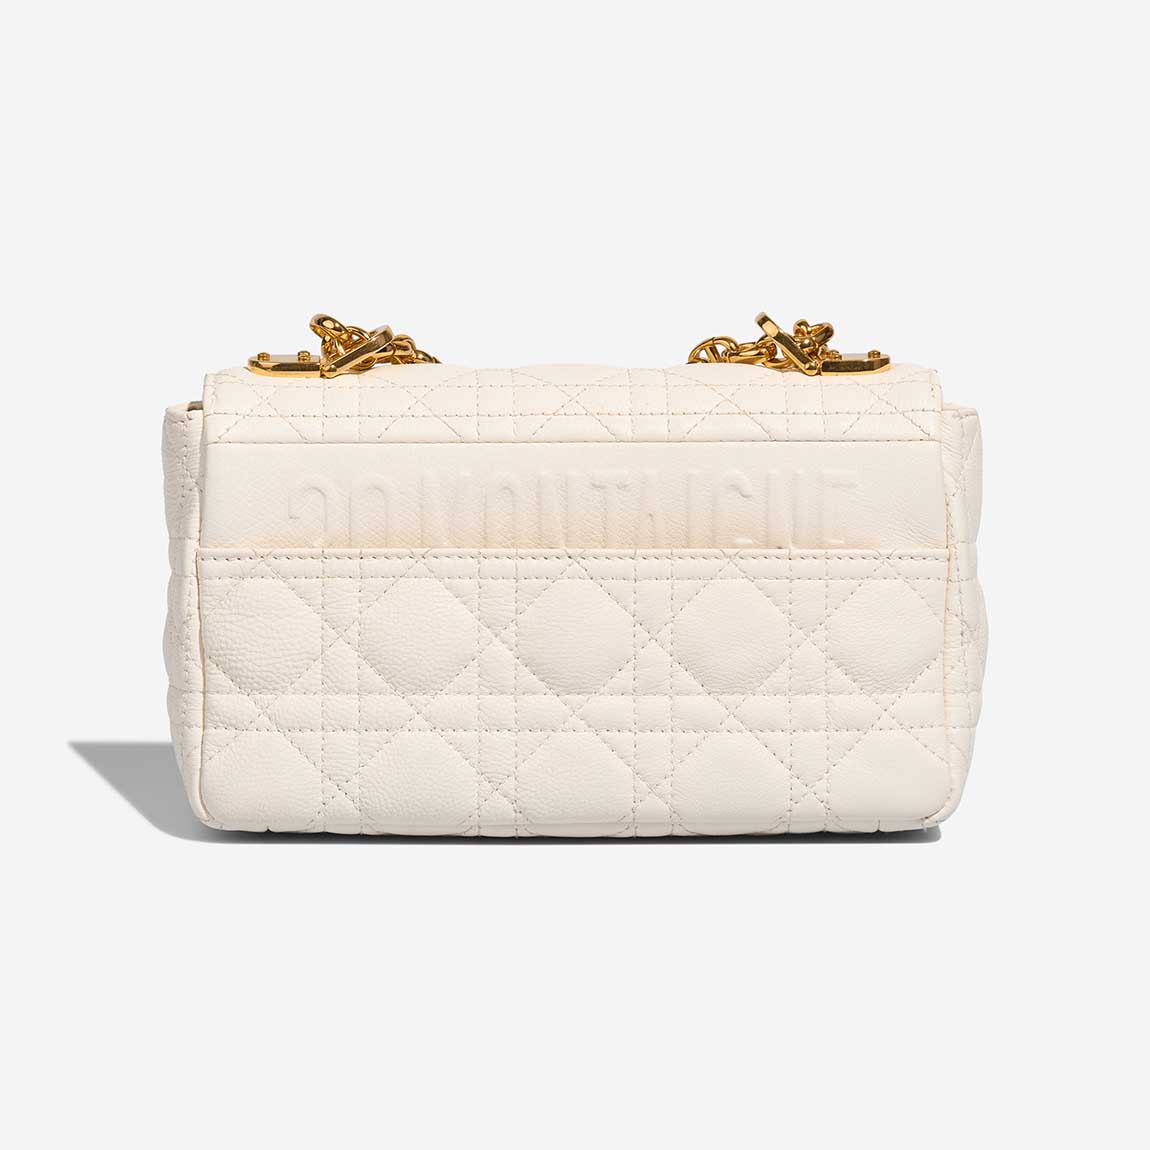 Dior Caro Small Calf White | Sell your designer bag